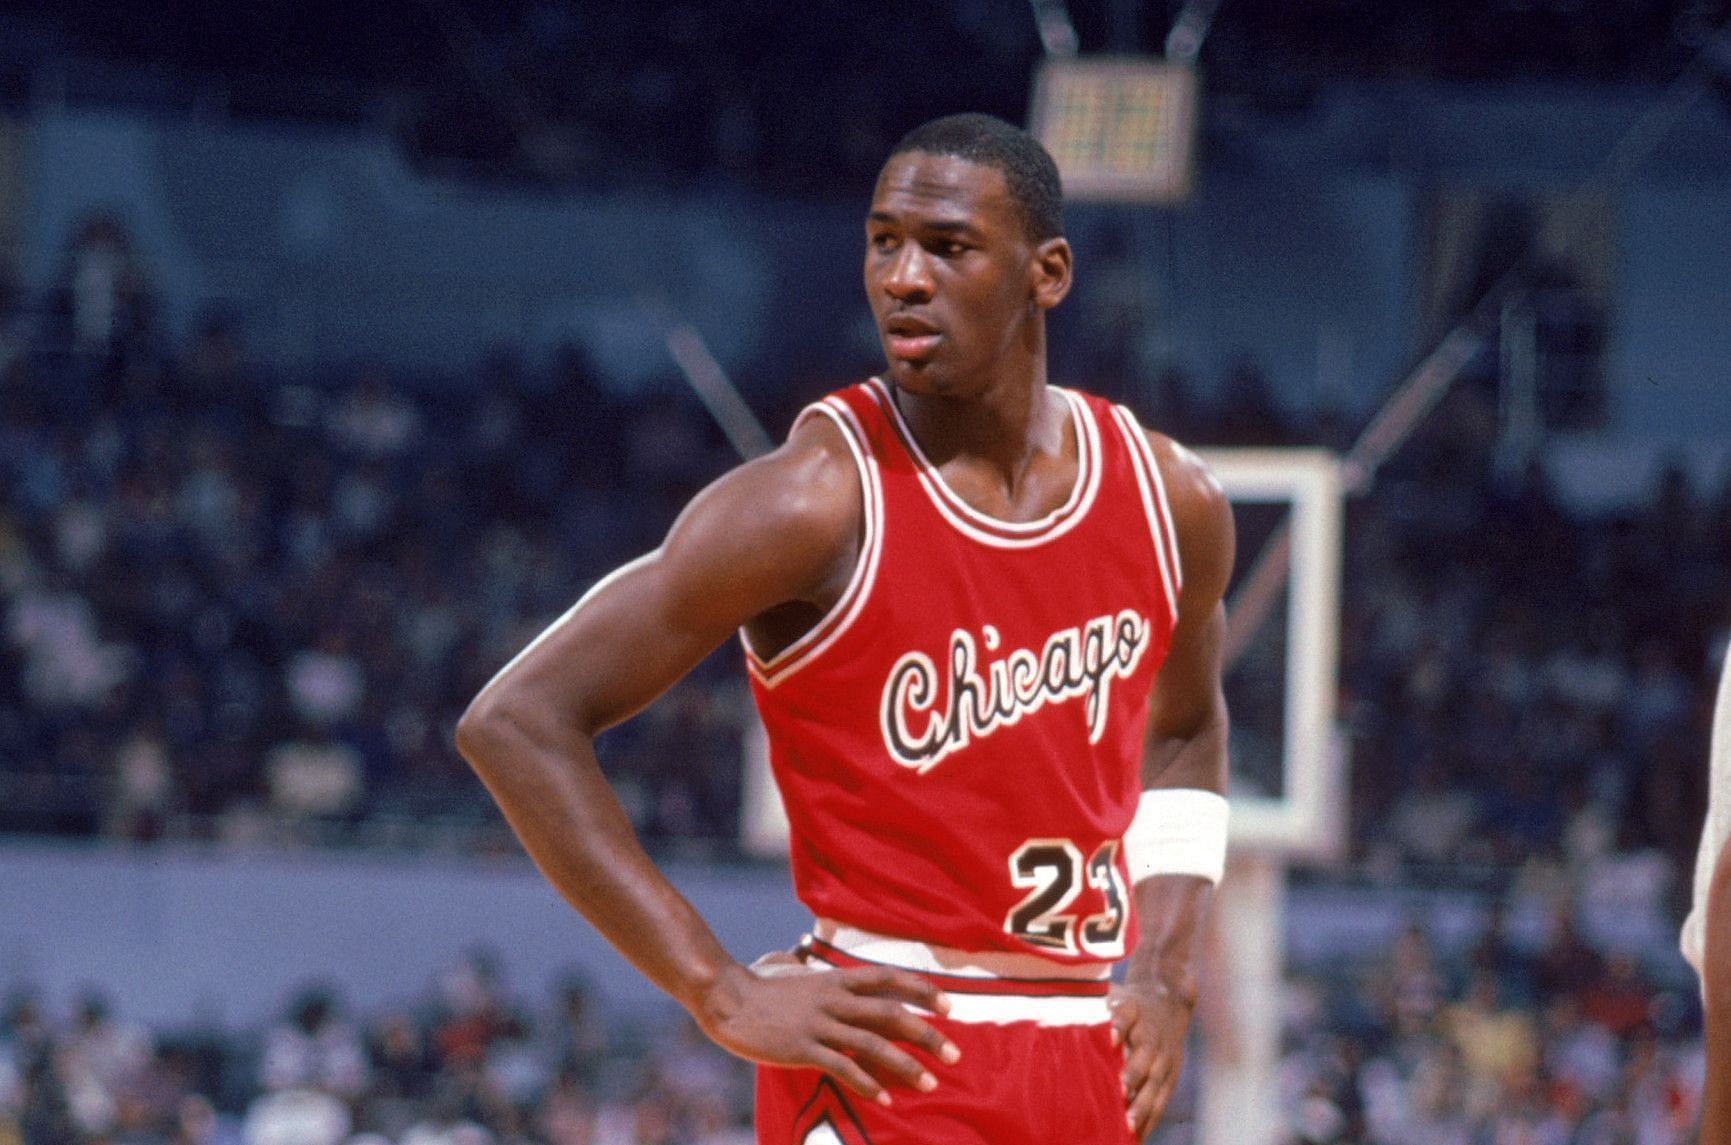 NBA legend Michael Jordan during his rookie season